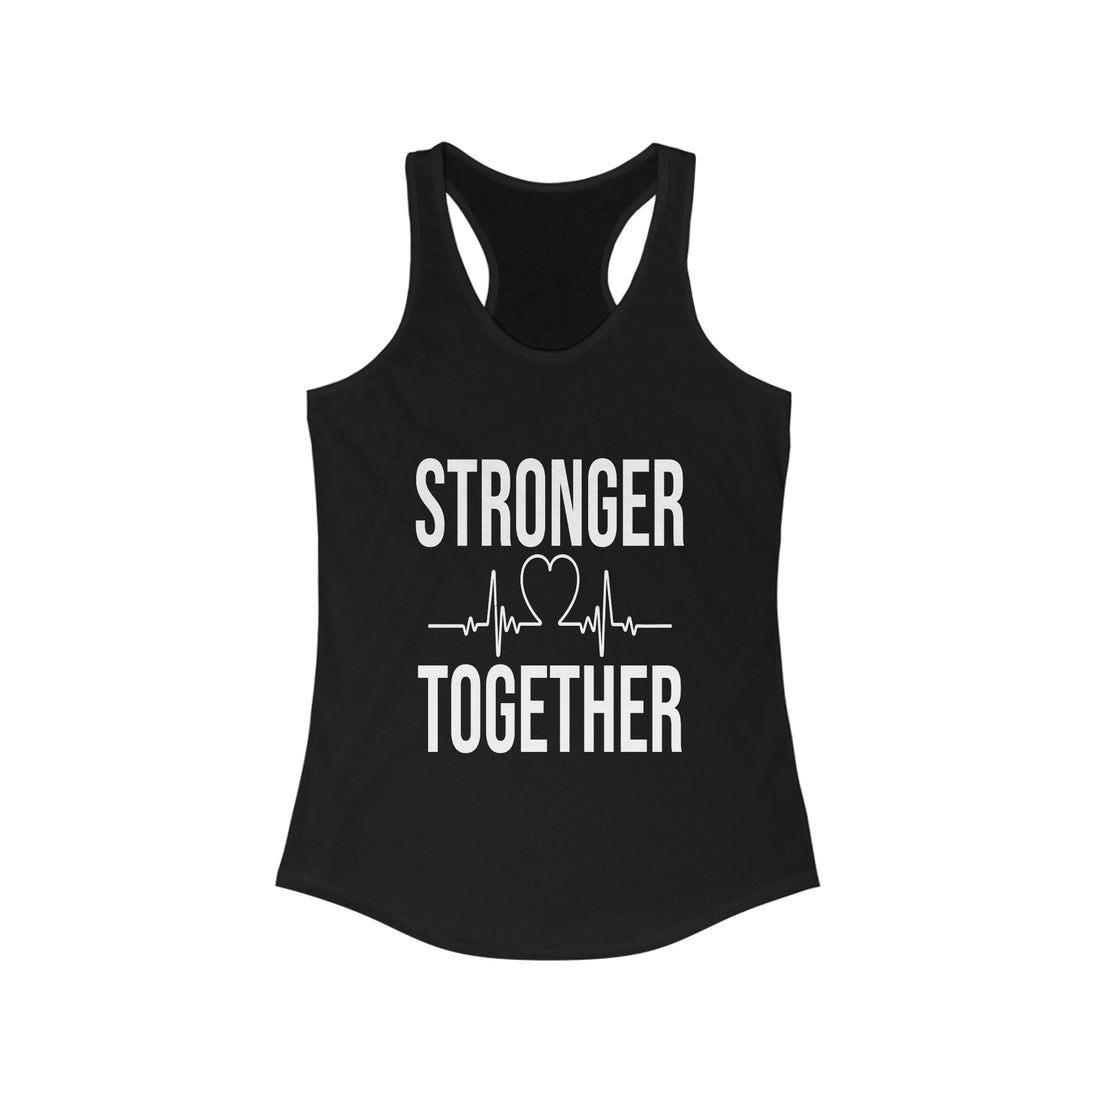 Stronger Together - Racerback Tank Top